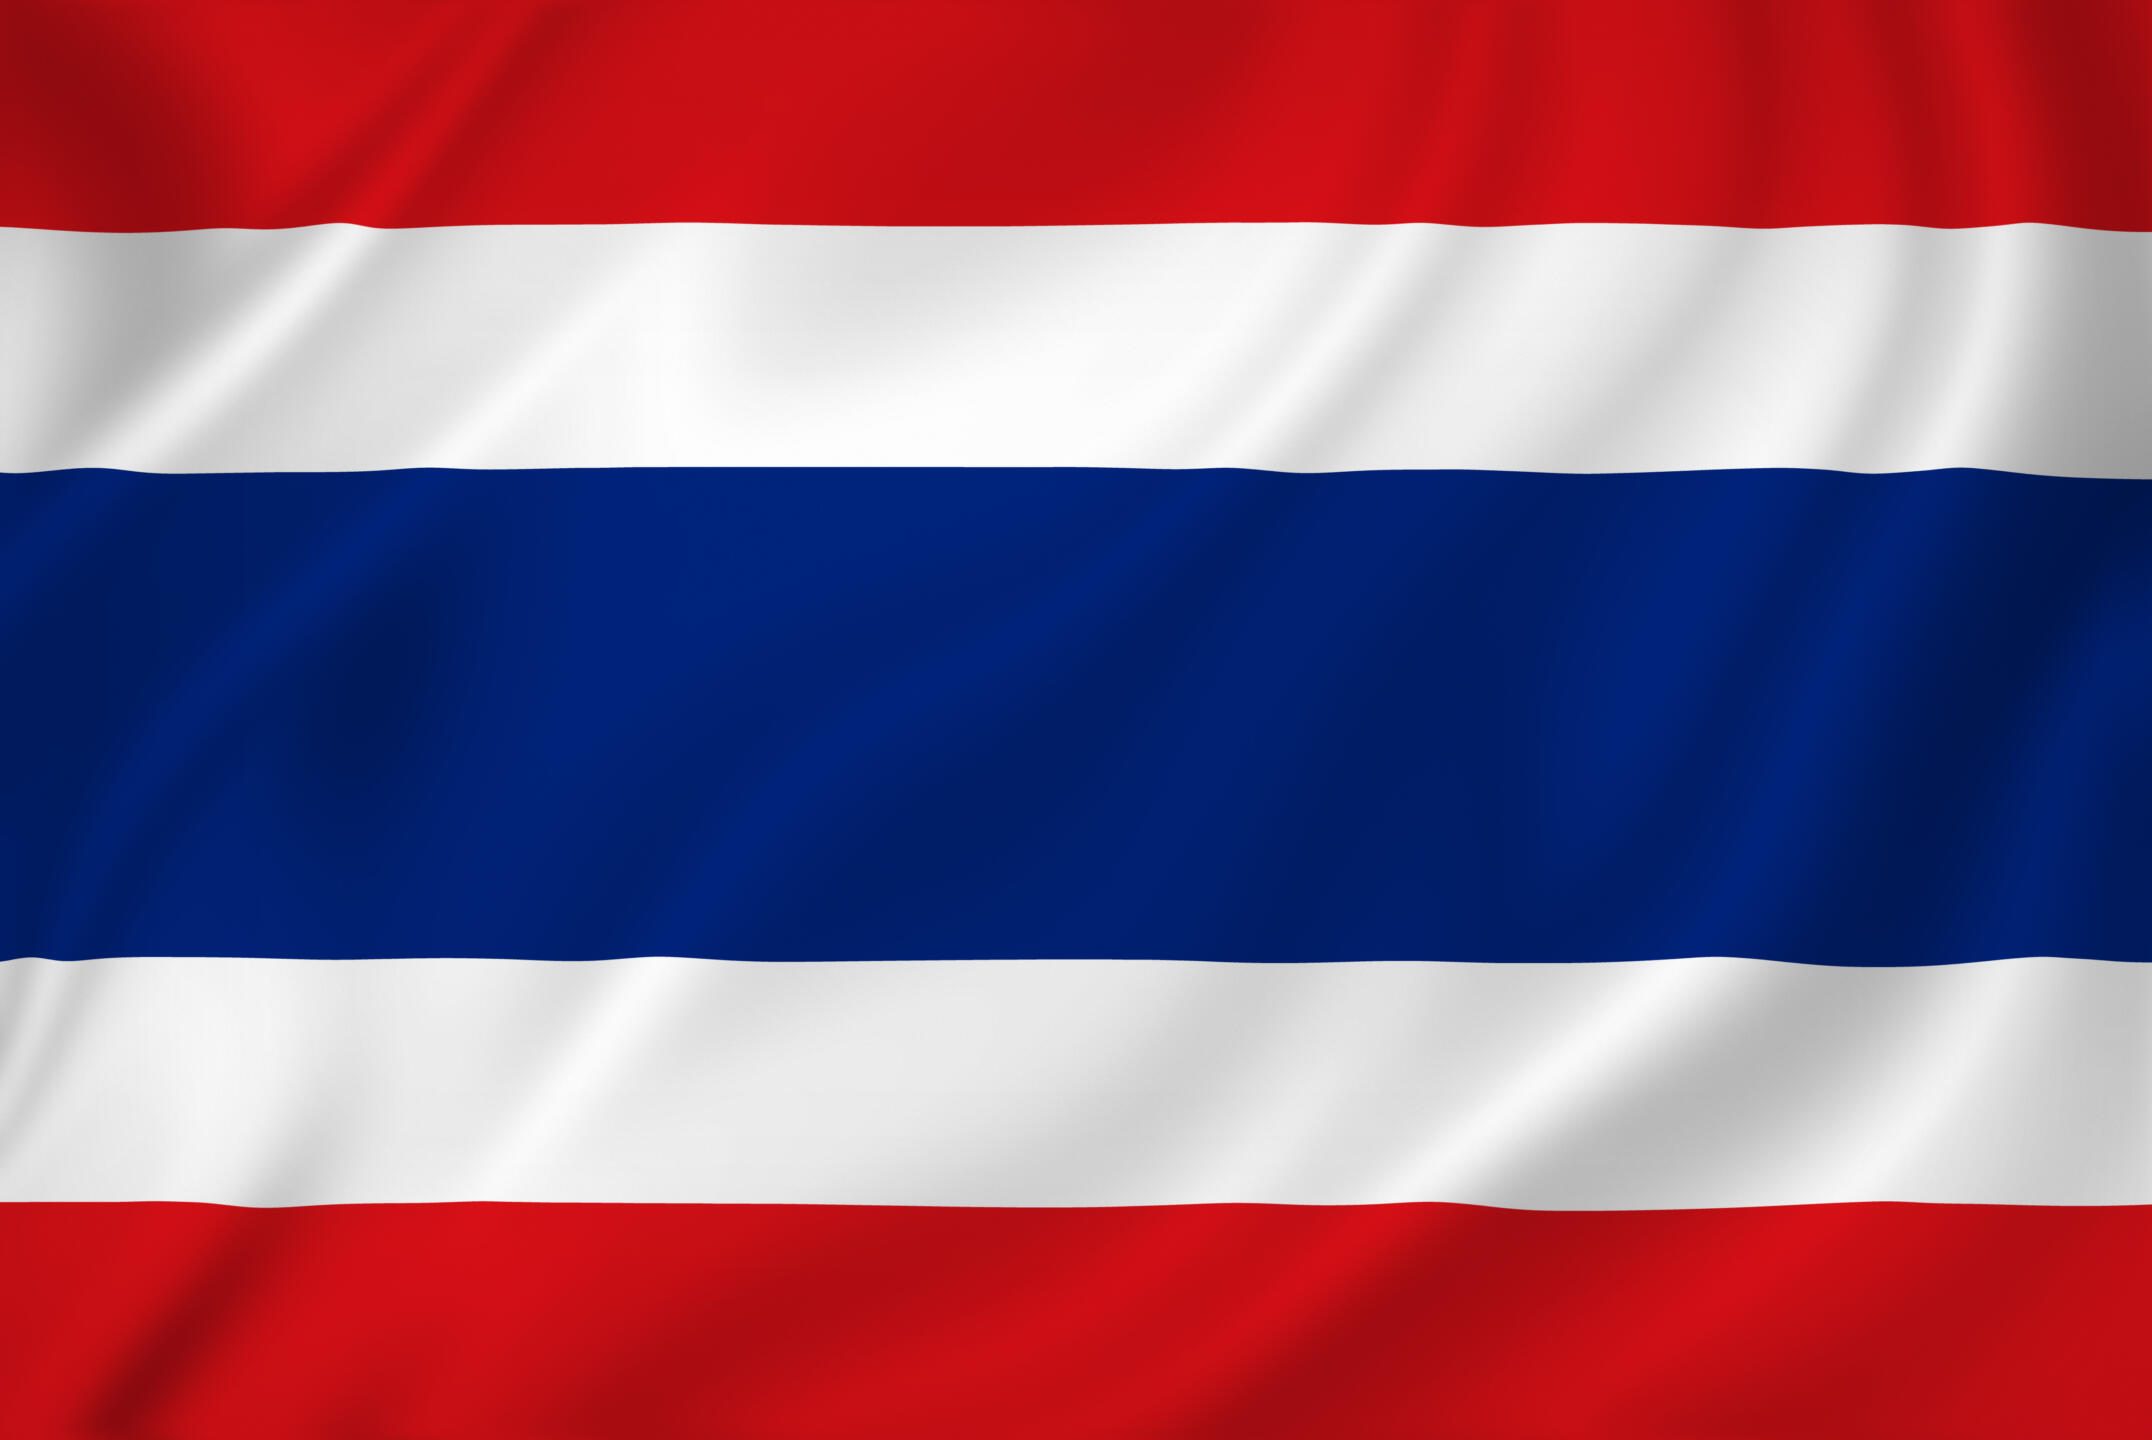 Drapeau de la Thailande tissu flottant